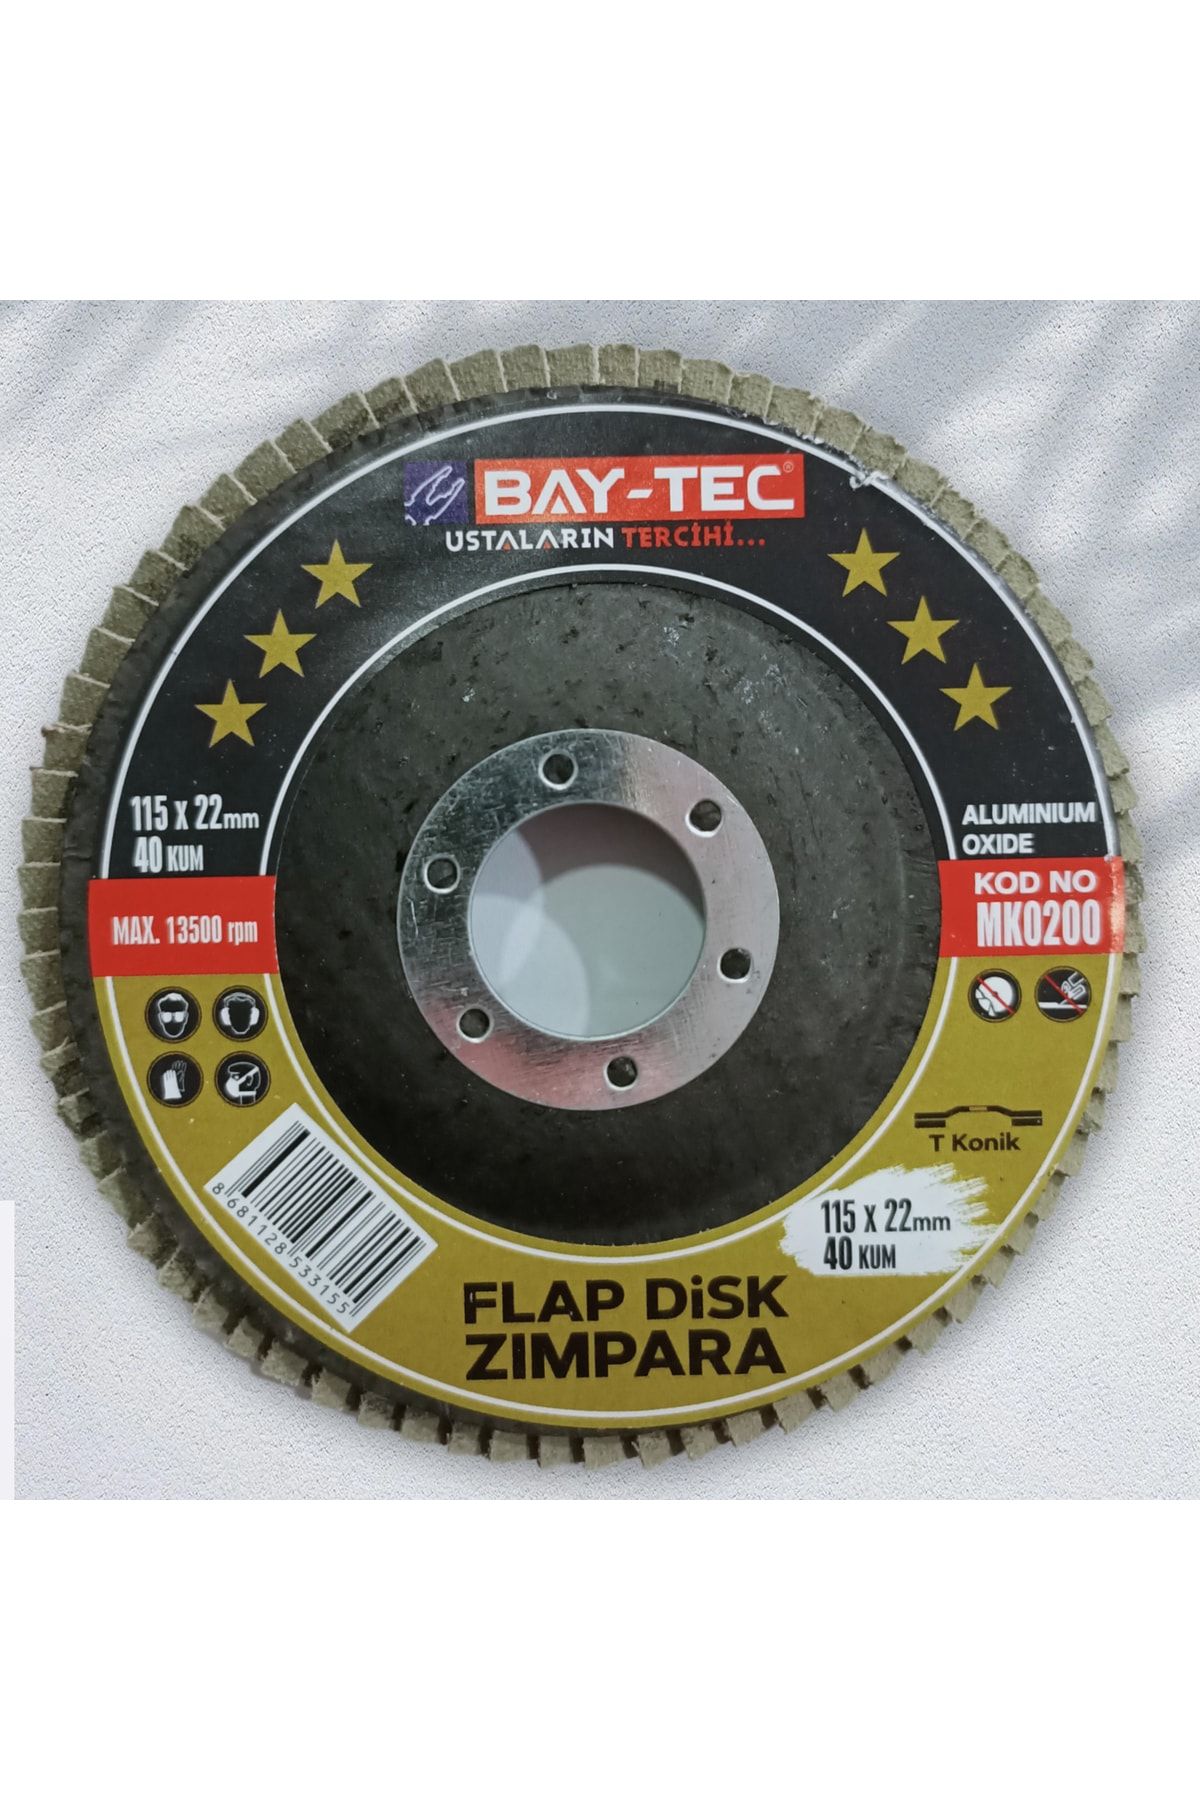 Baytec Bay-tec Flap Disk Zımpara 115 X 22mm 40 Kum